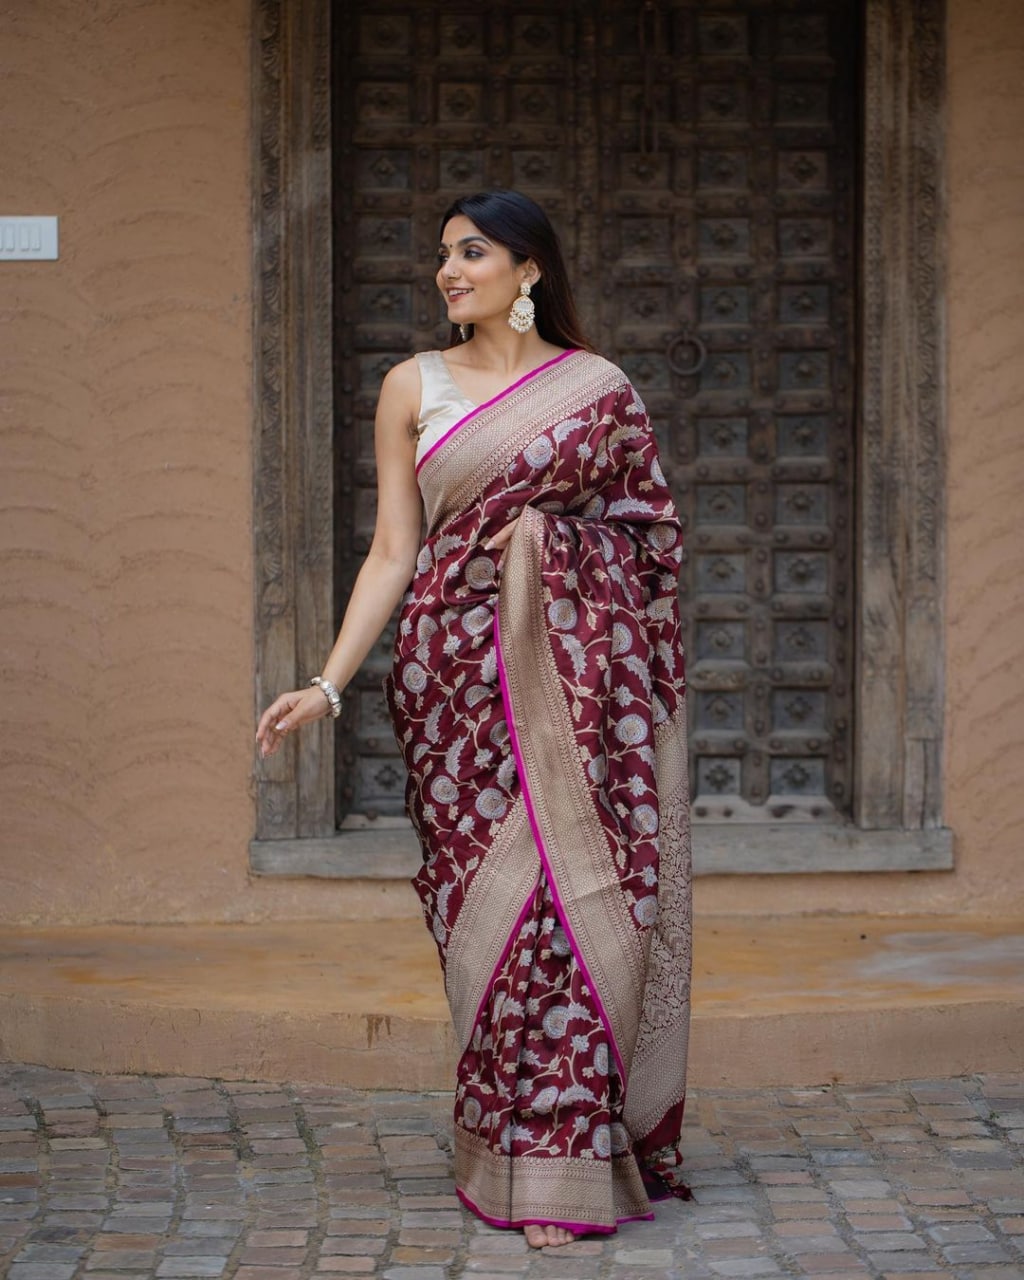 "Exquisite Organic Banarasi Sarees: Breathable Elegance for Unforgettable Weddings"